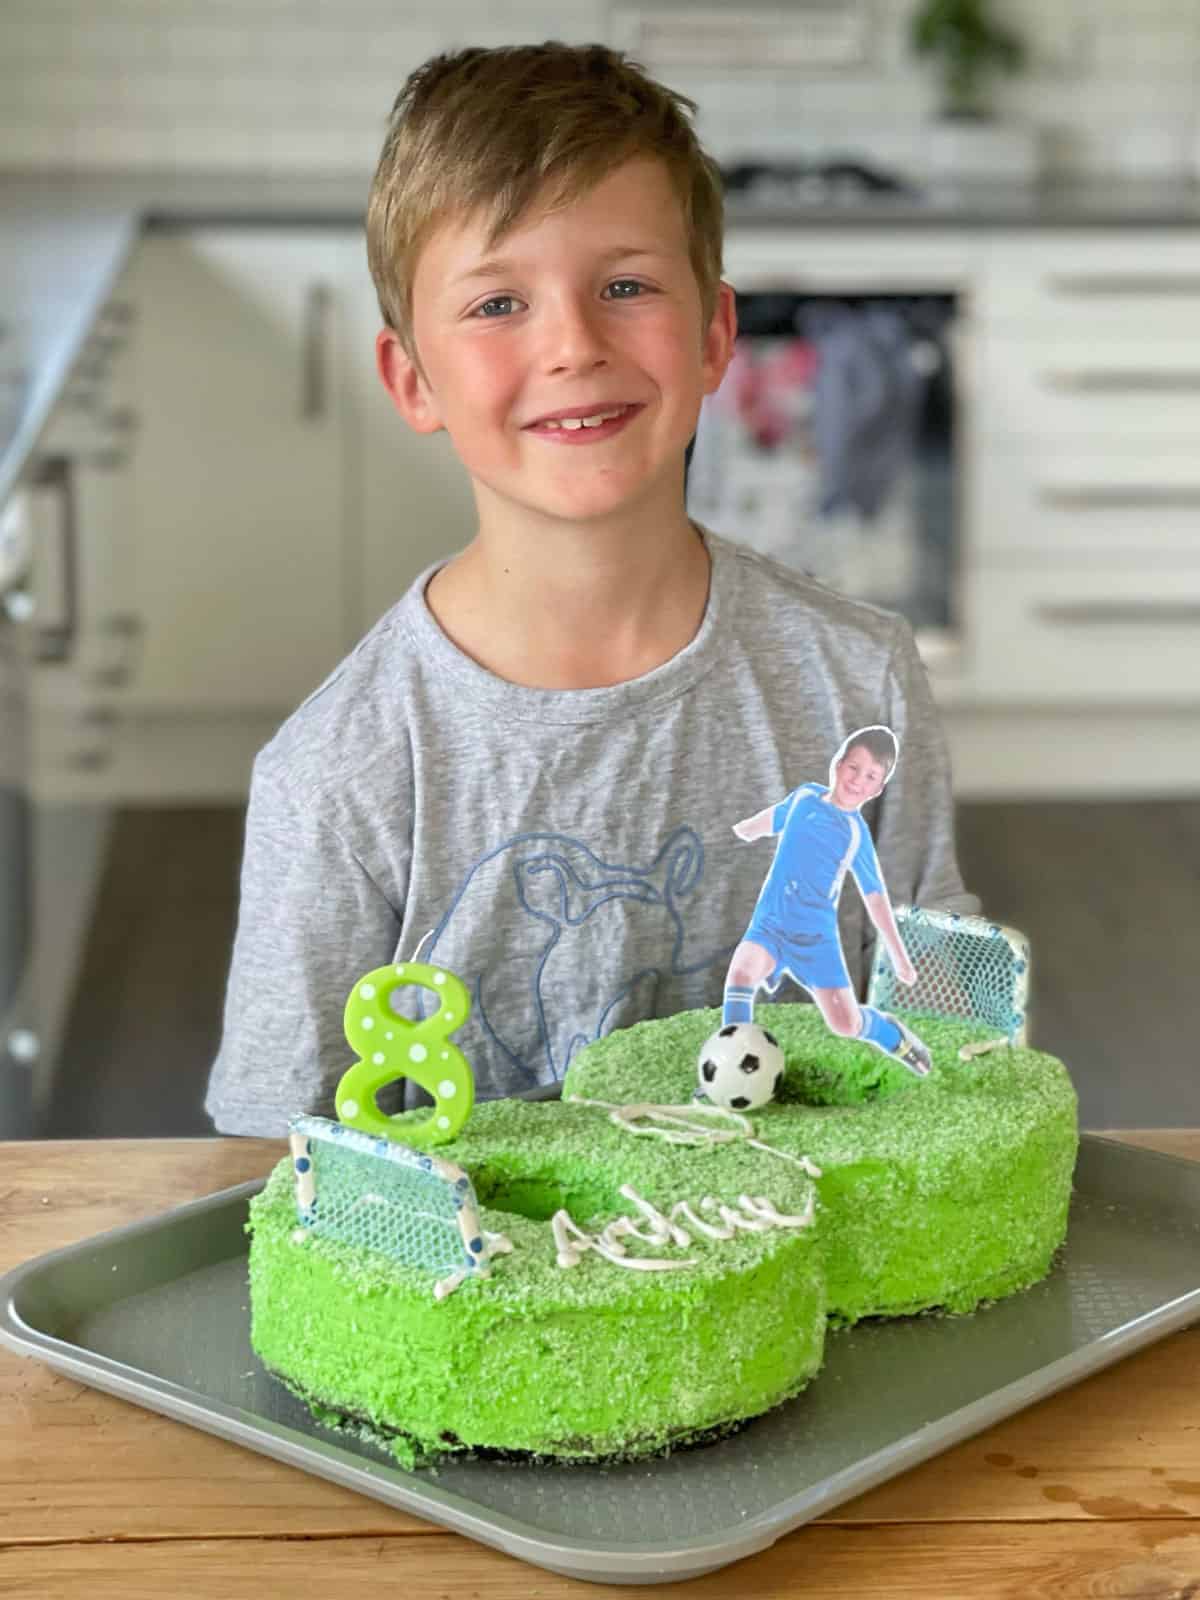 Easy DIY kids' Birthday cake ideas from VJ cooks - Plus Pirate cake video